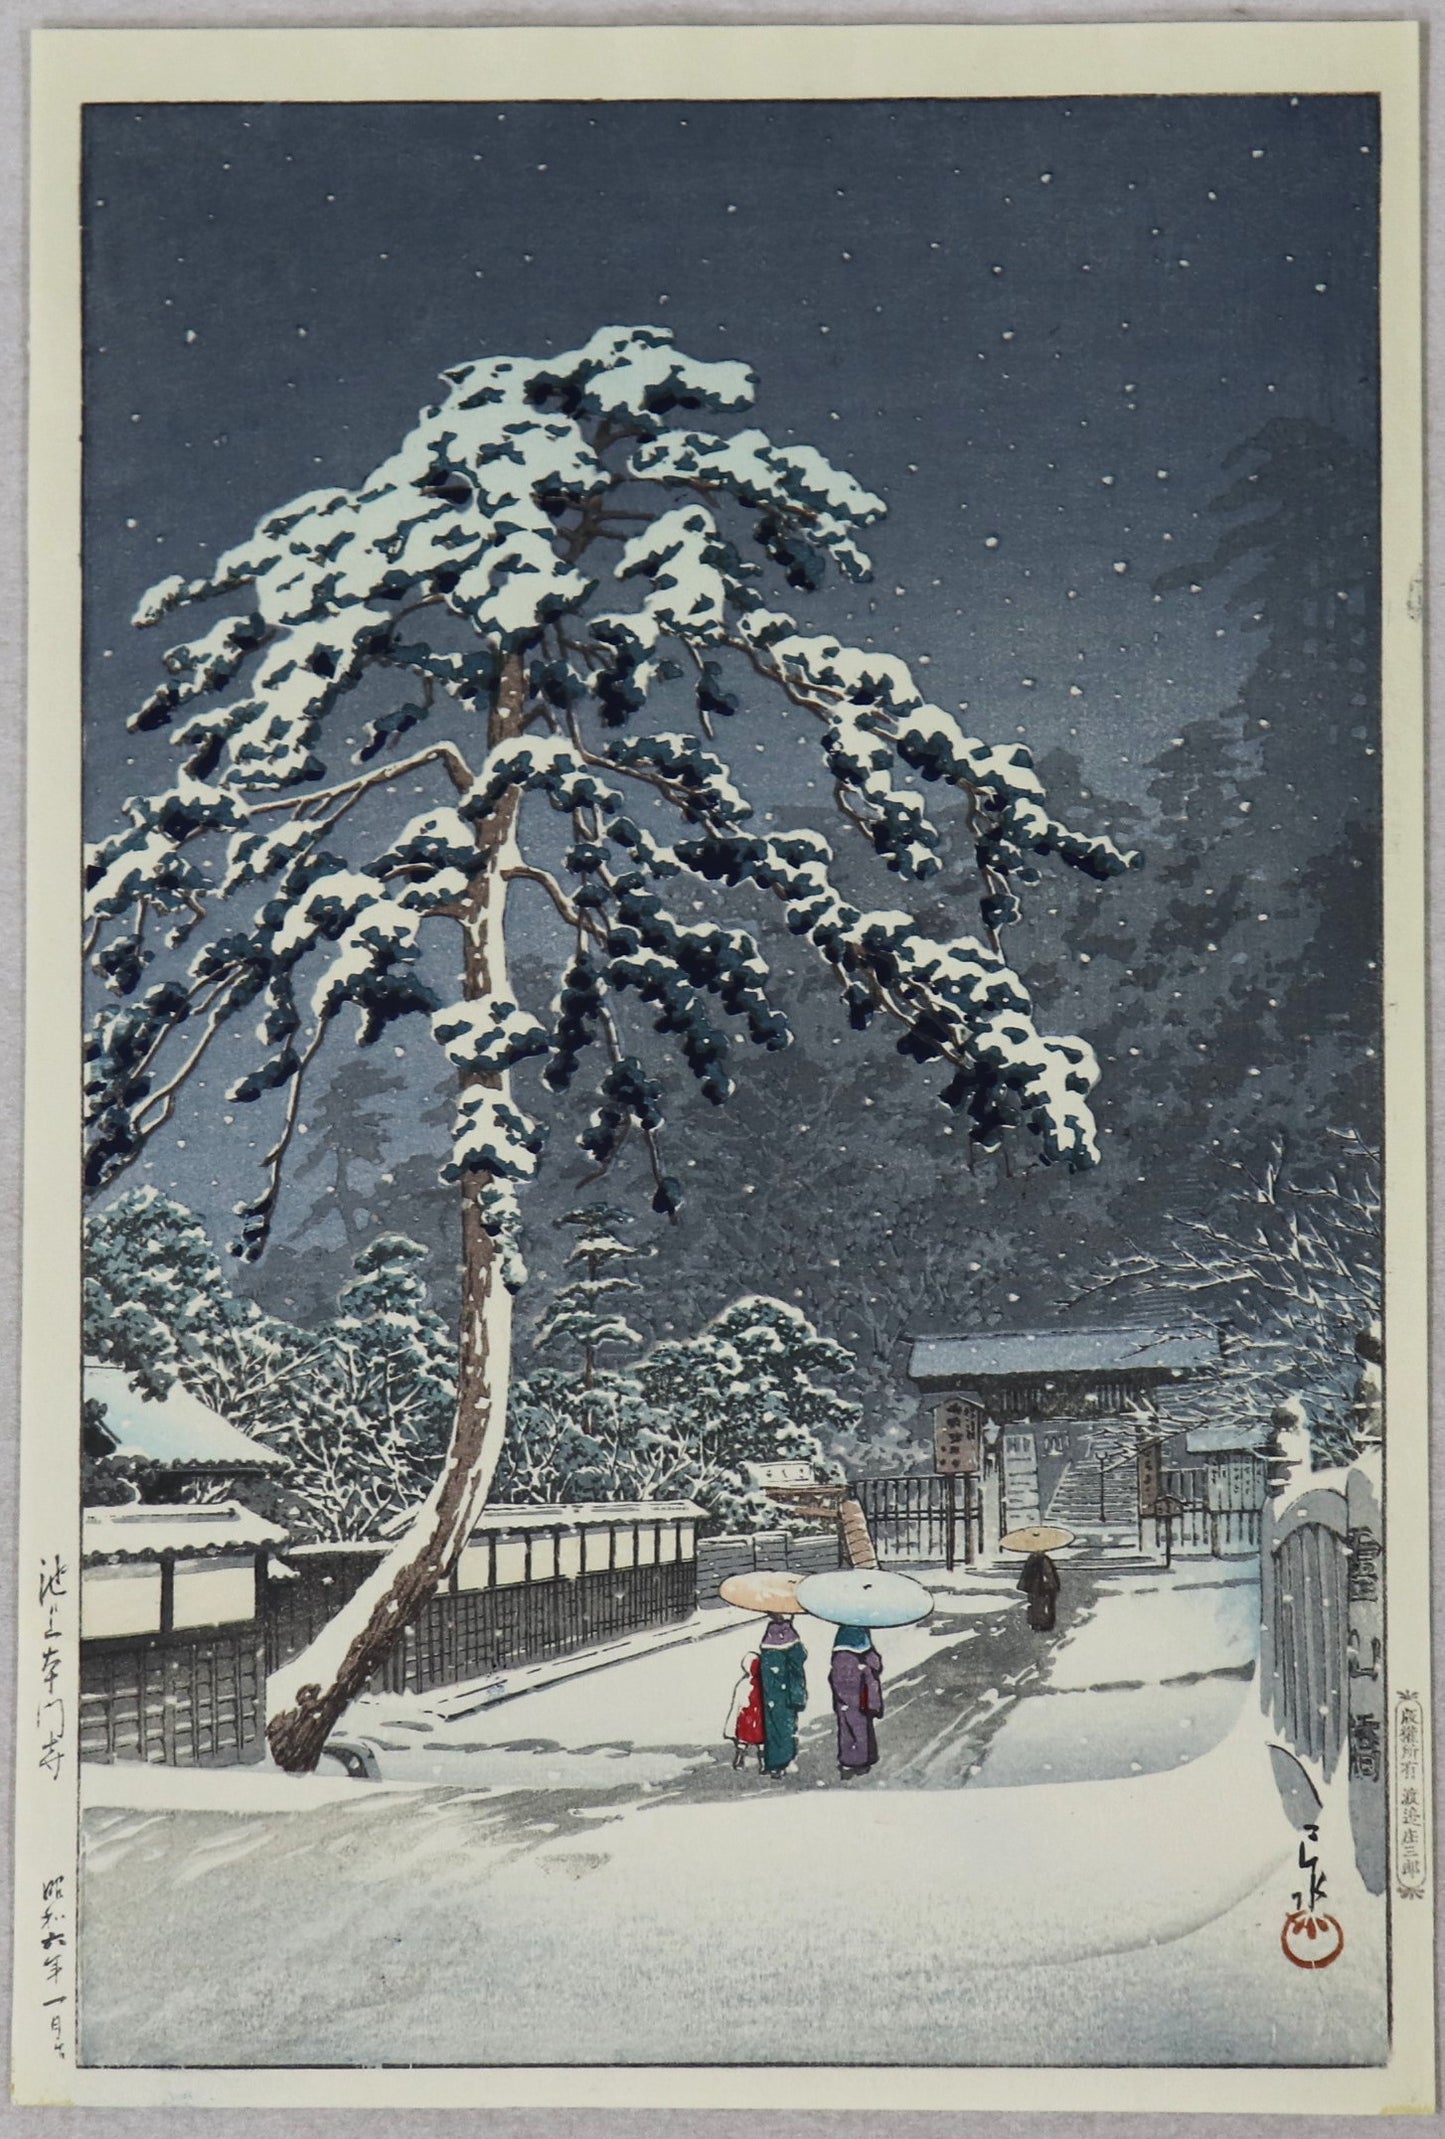 Snowy day at Honmon-ji Temple in Ikegami by Kawase Hasui / Jour neigeux au temple Honmon-ji dans le quartier d'Ikegami